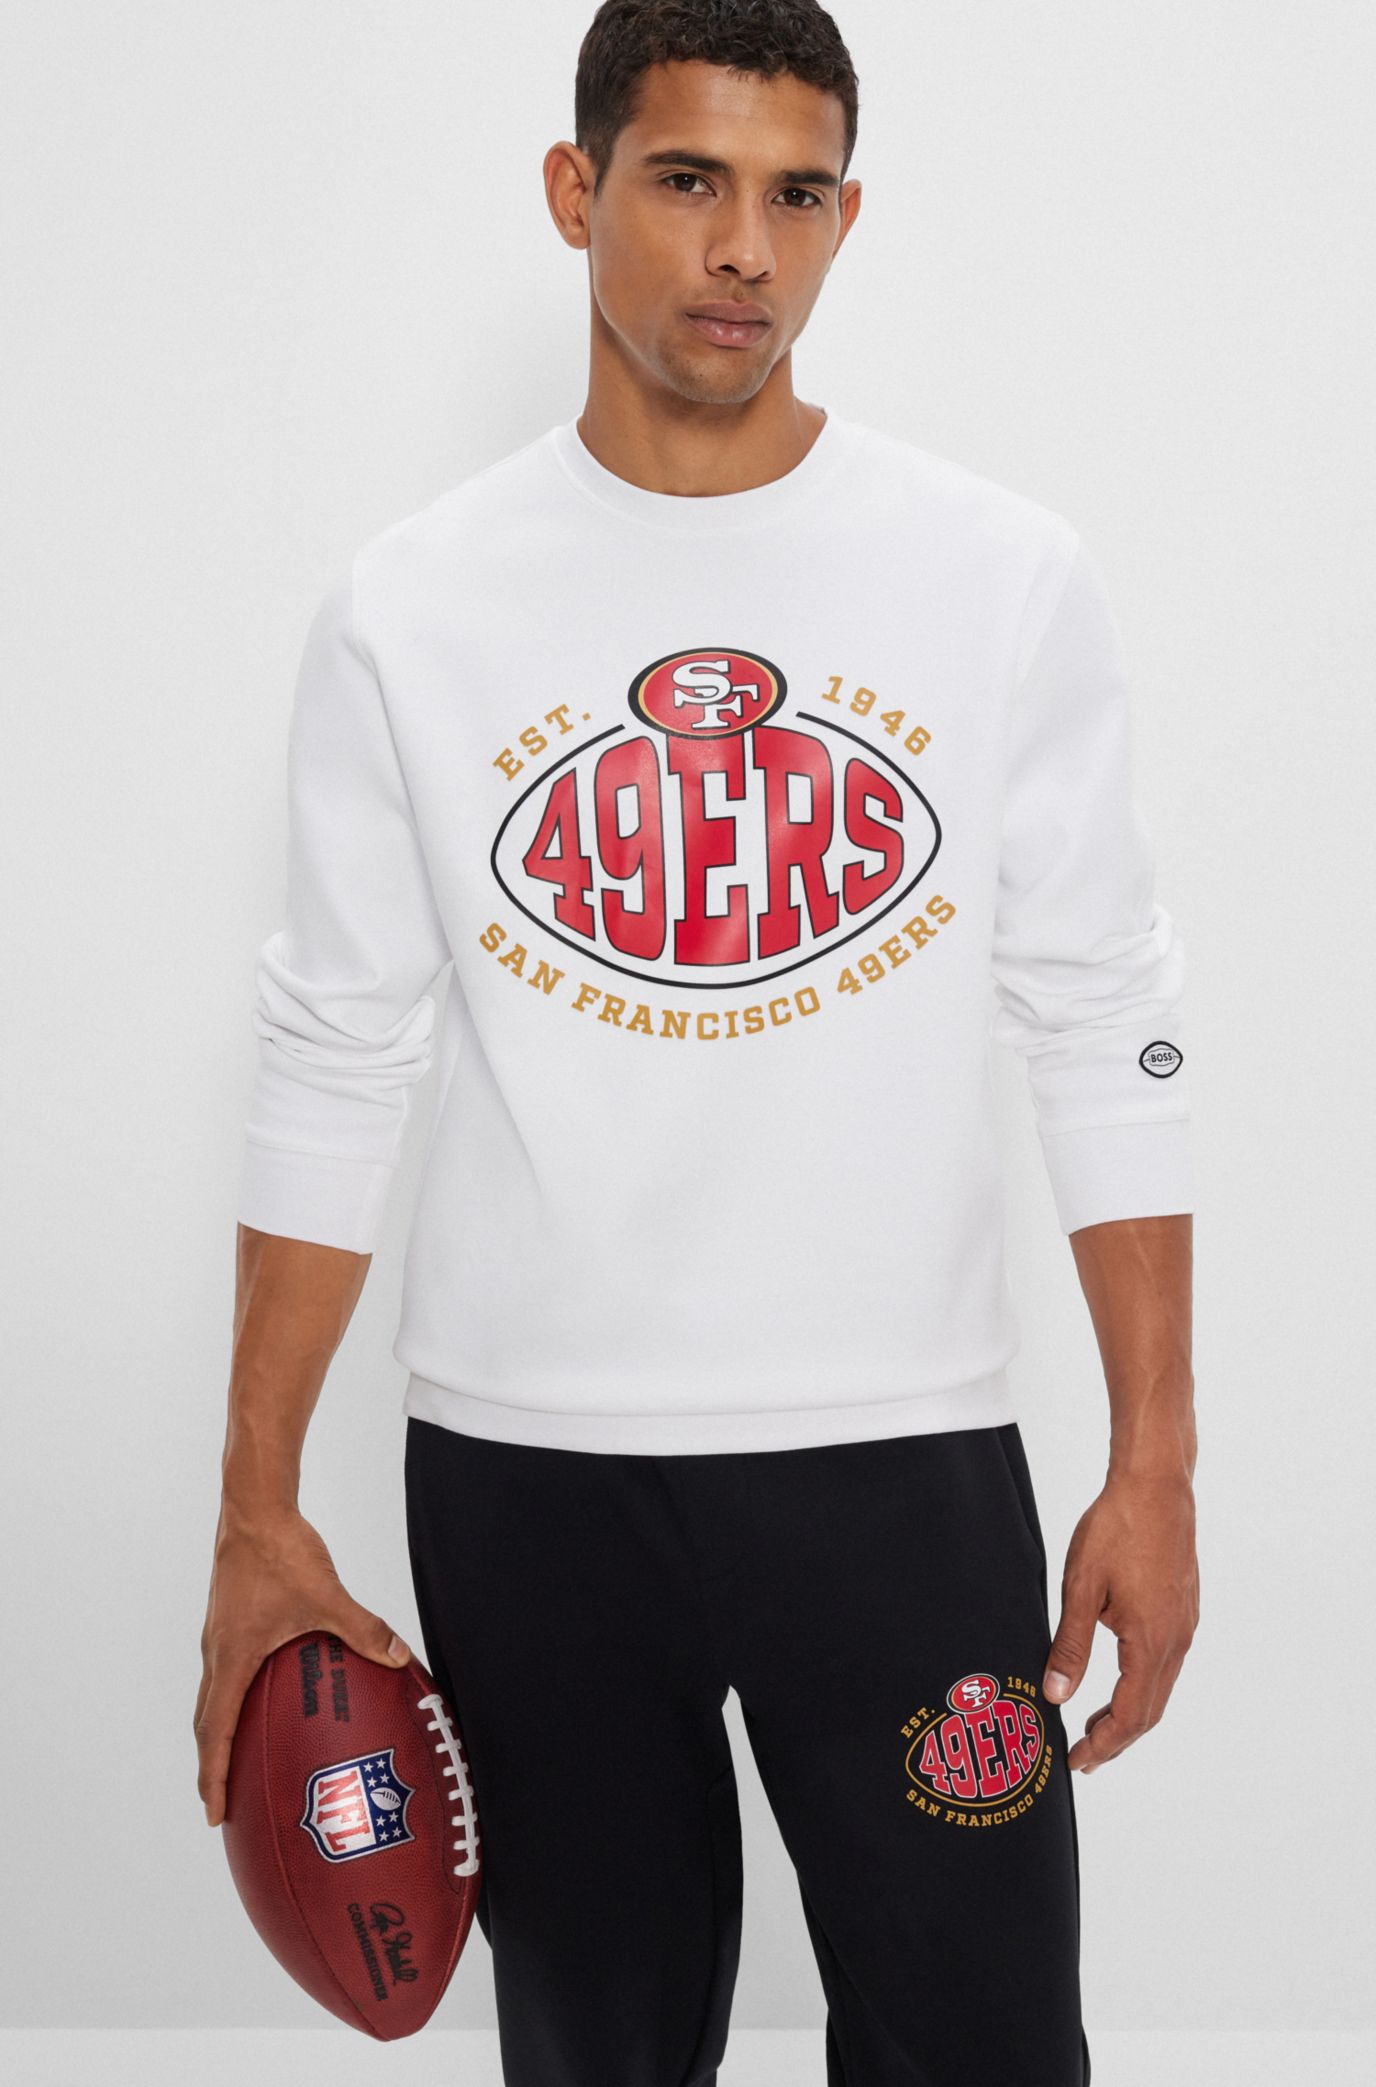 San Francisco 49ers Women's NFL Team Apparel Shirt Small, Medium or XL